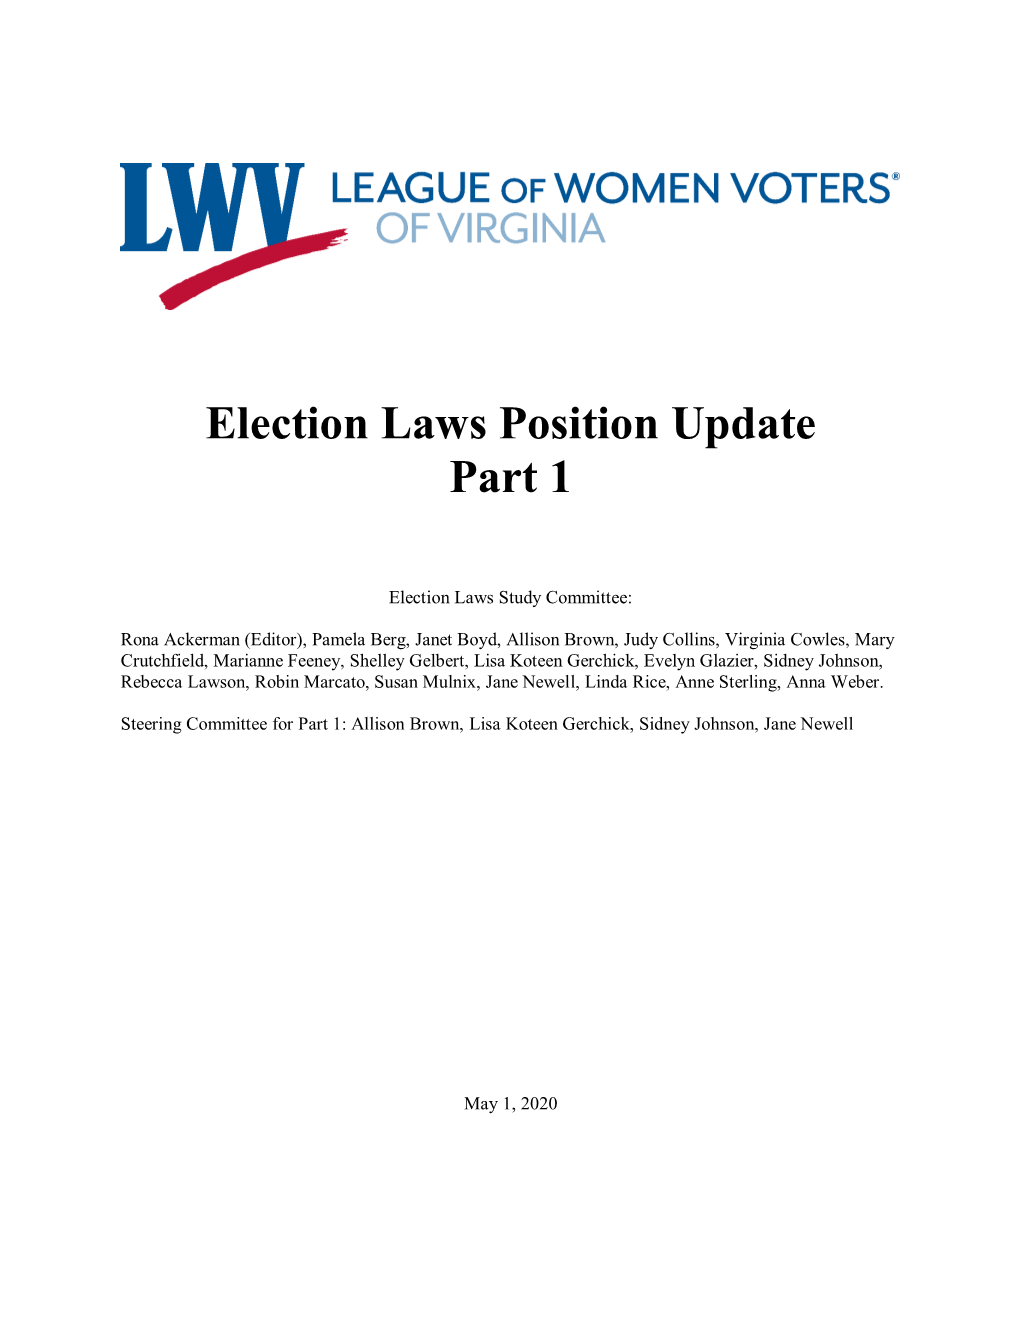 Election Laws Position Update Part 1